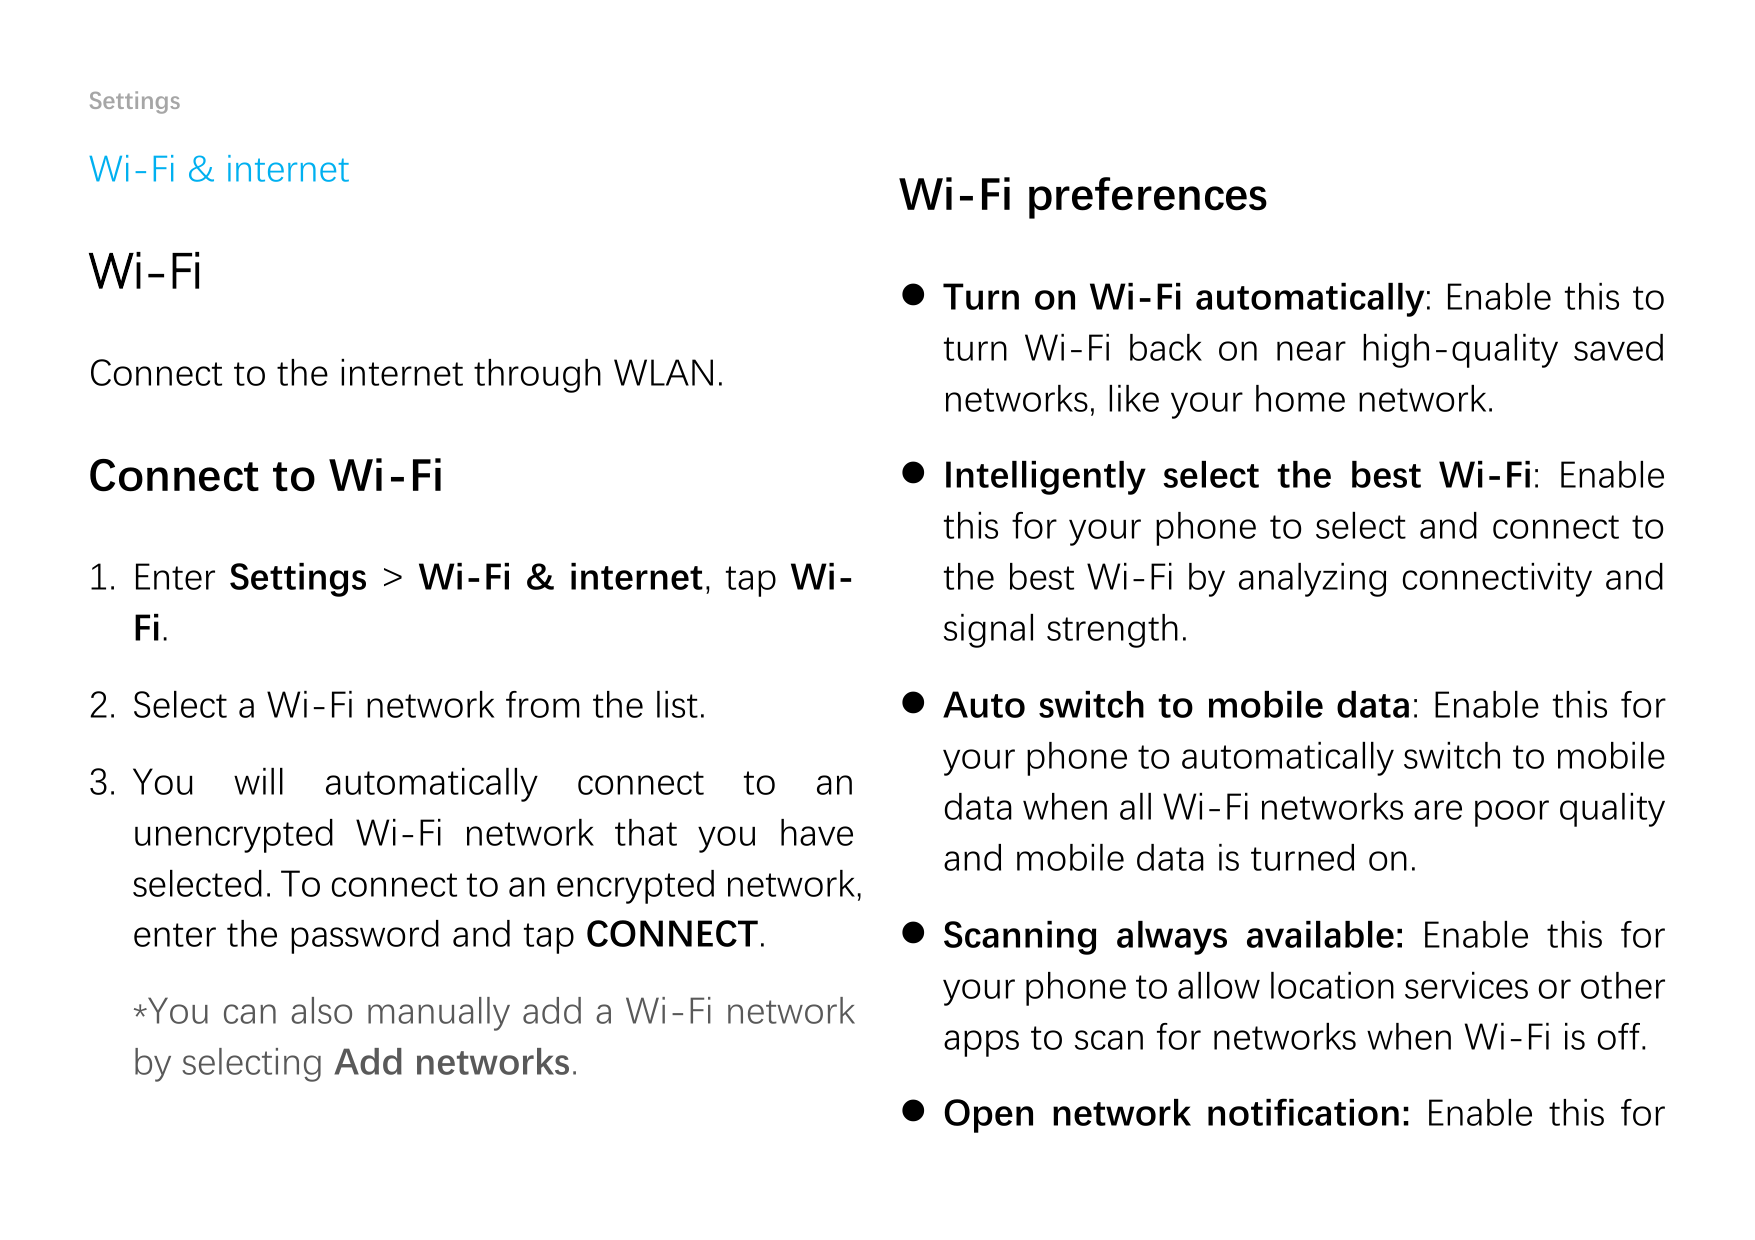 SettingsWi-Fi & internetWi-FiConnect to the internet through WLAN.Connect to Wi-Fi1. Enter Settings > Wi-Fi & internet, tap WiFi